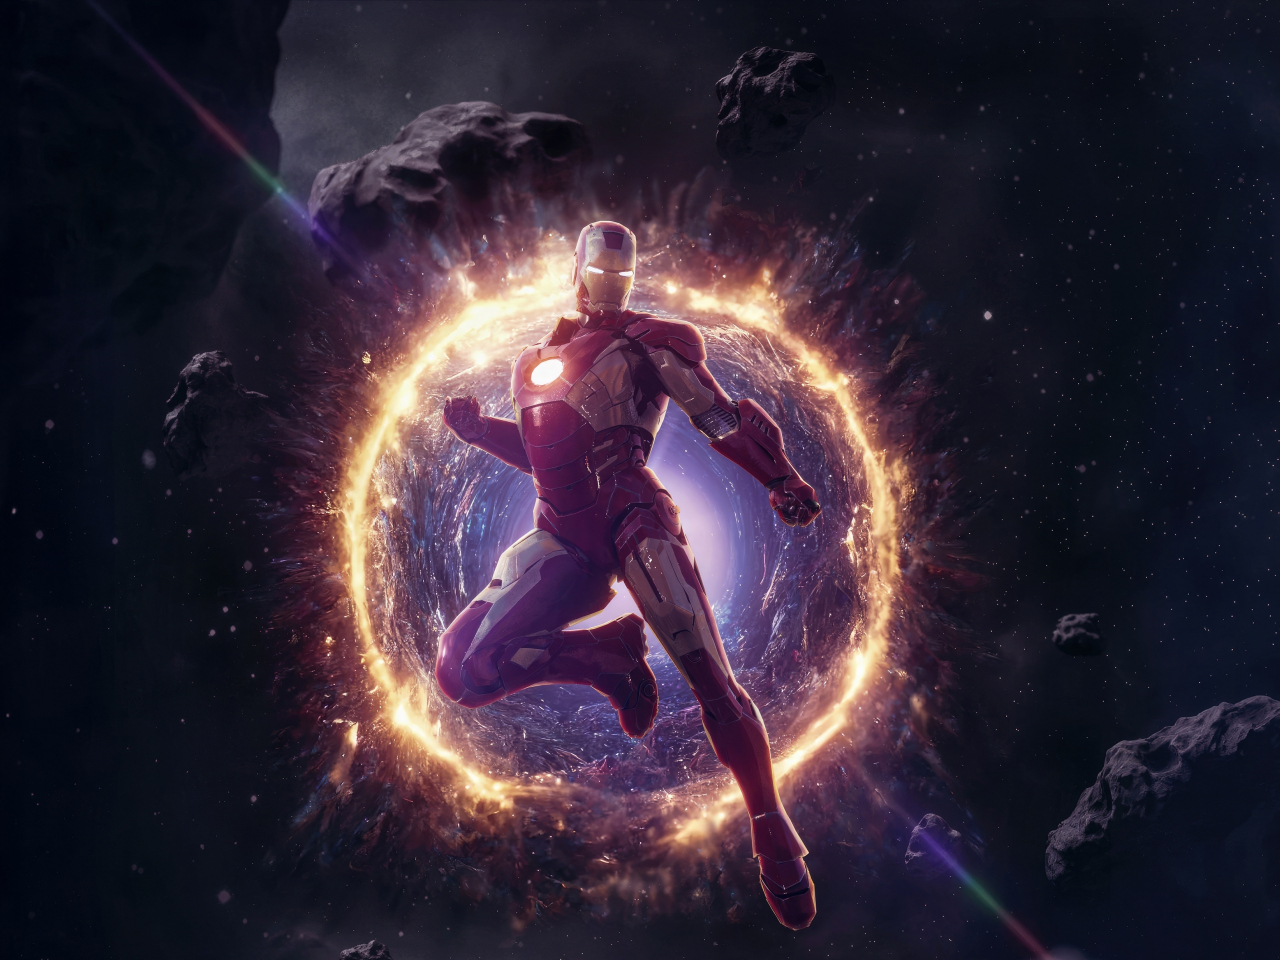 Iron man through the wormhole, space, 1280x960 wallpaper